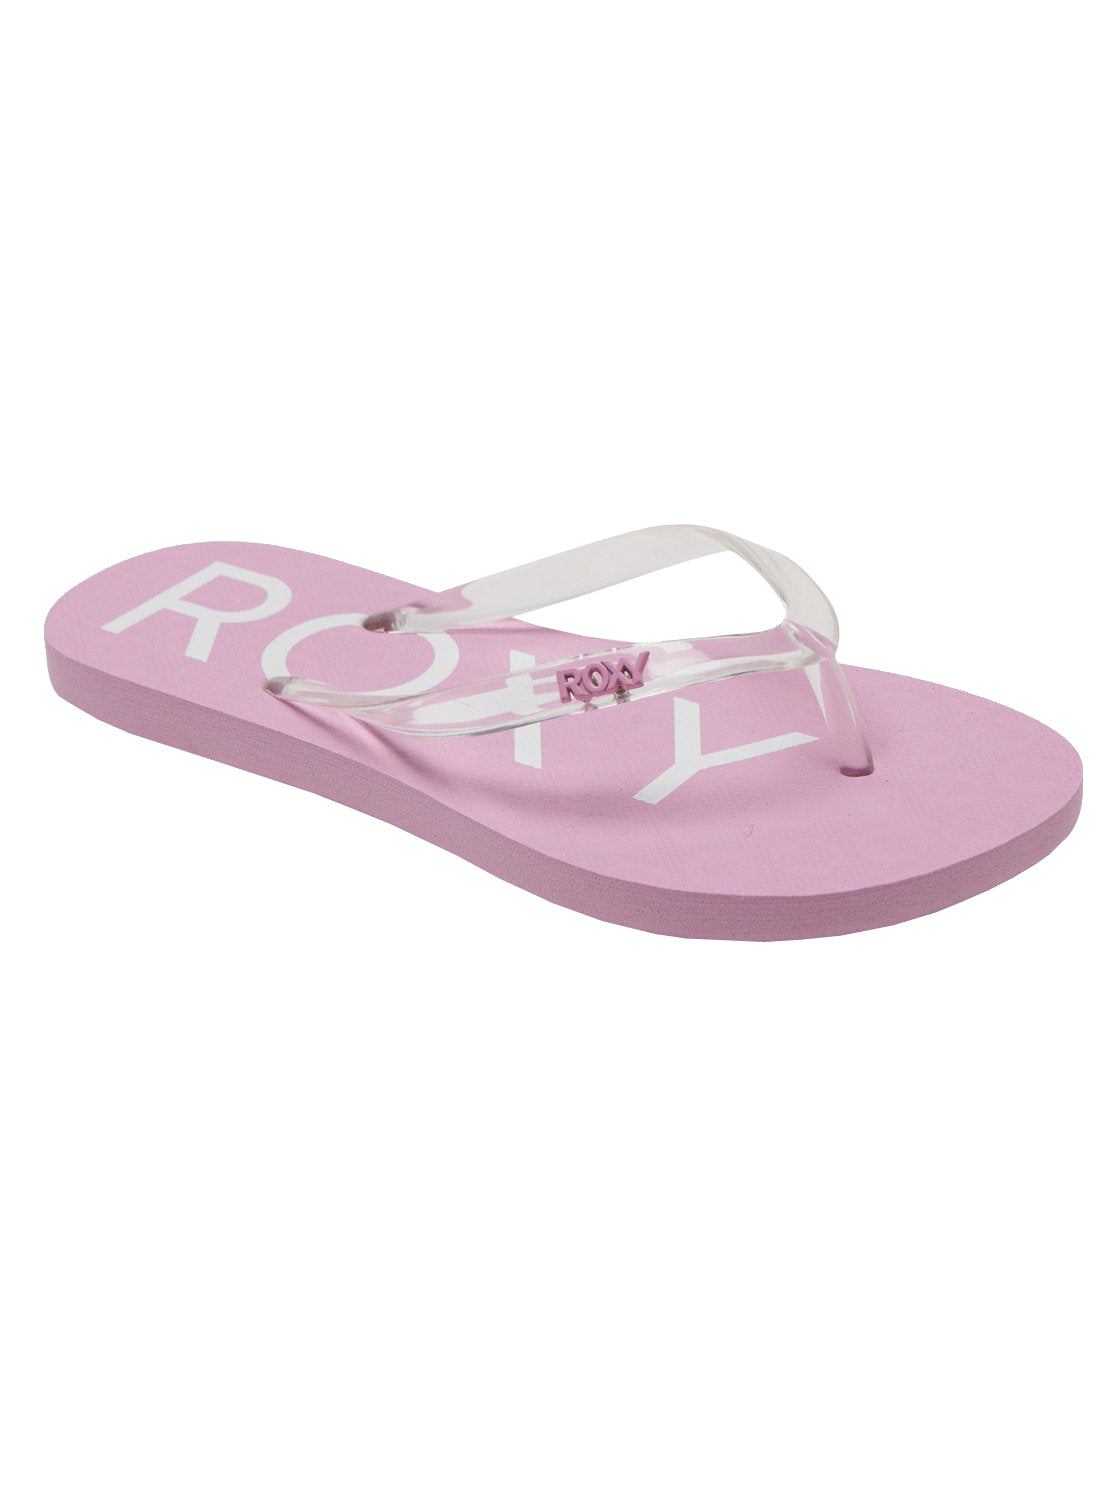 Roxy Viva Jelly Girls Sandal LRS-Lilac Rose 11 C